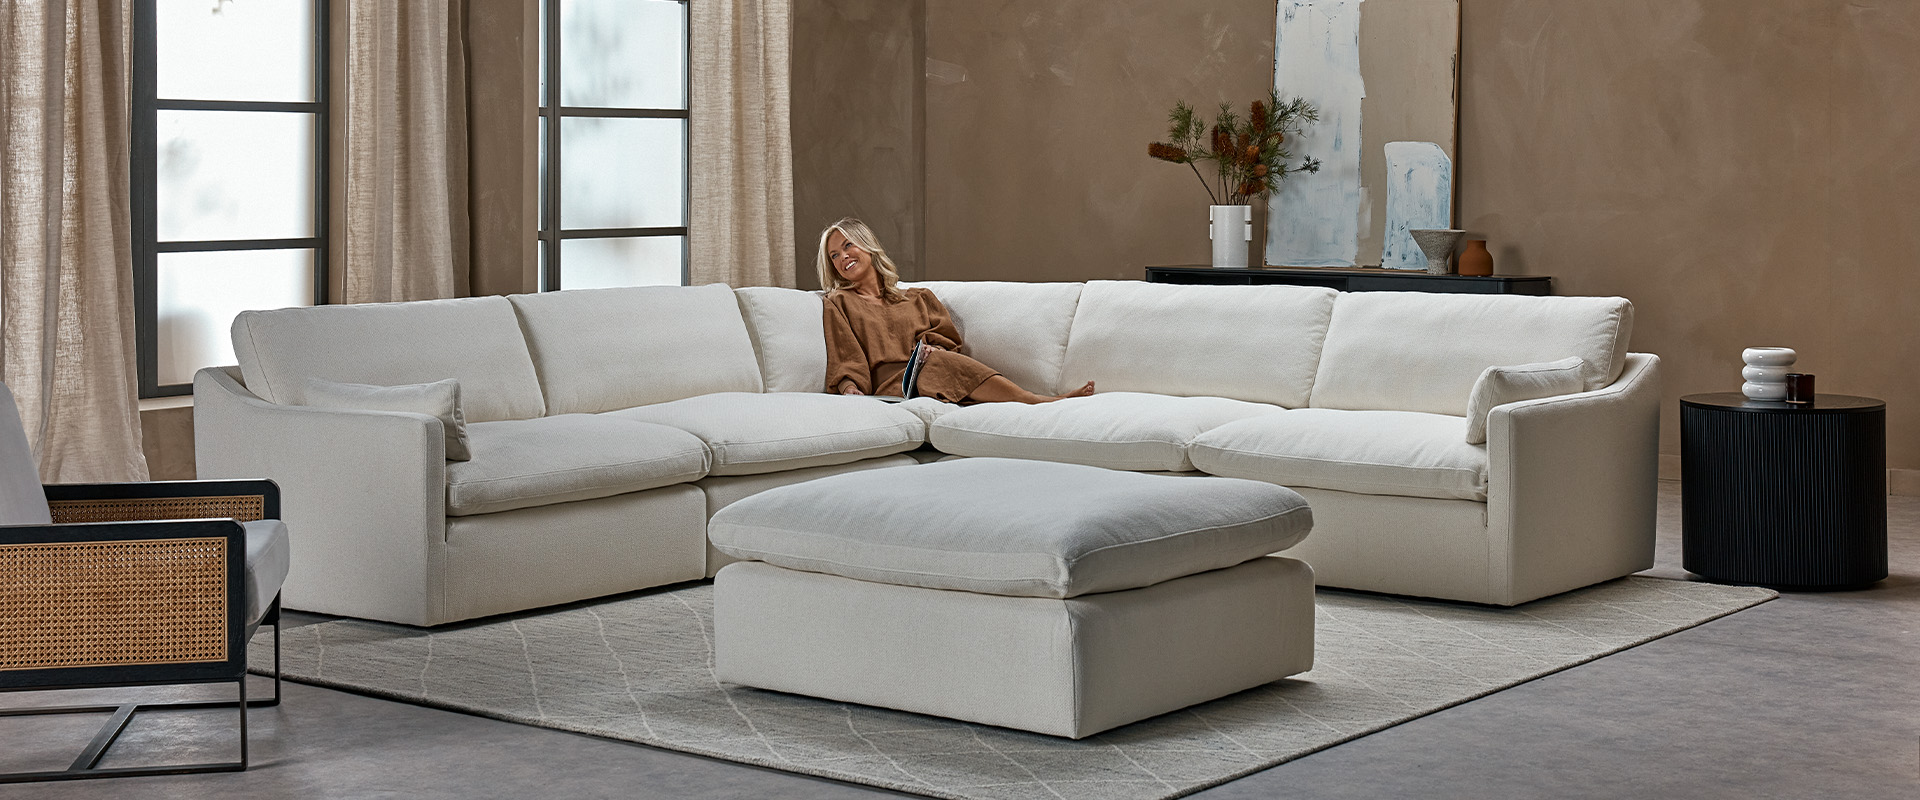 Dream Sofa Modular Lounge Nick Scali